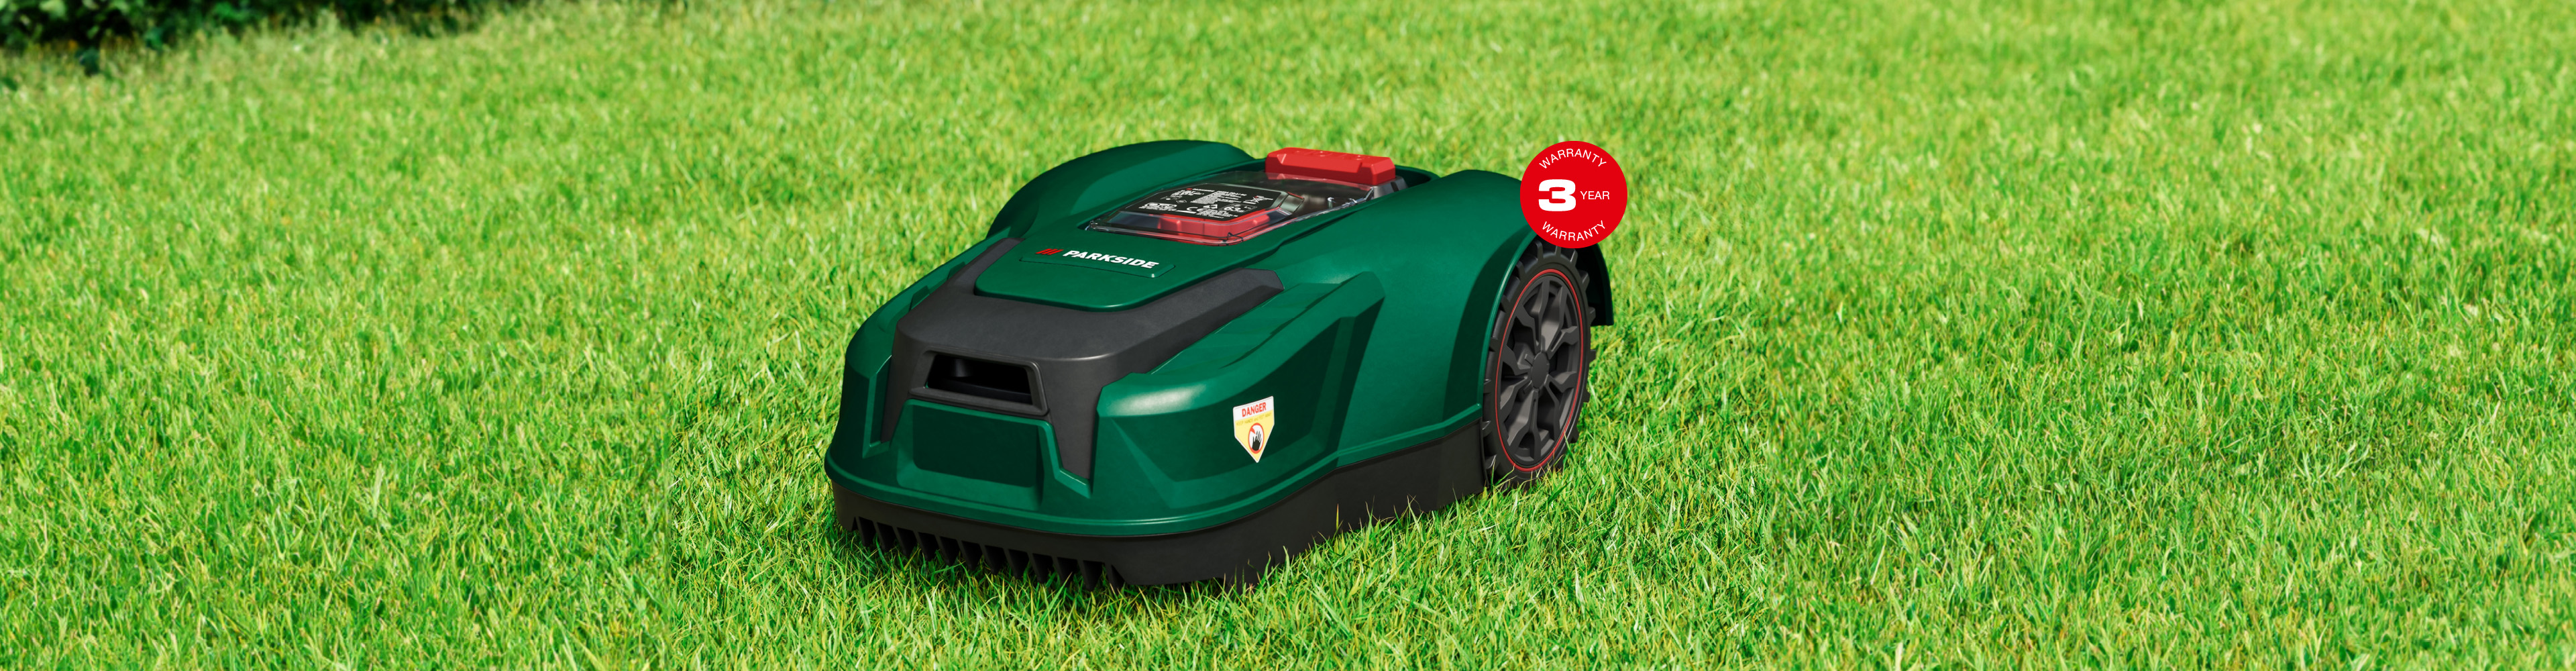 20V Smart Robot Lawn Mower FAQs